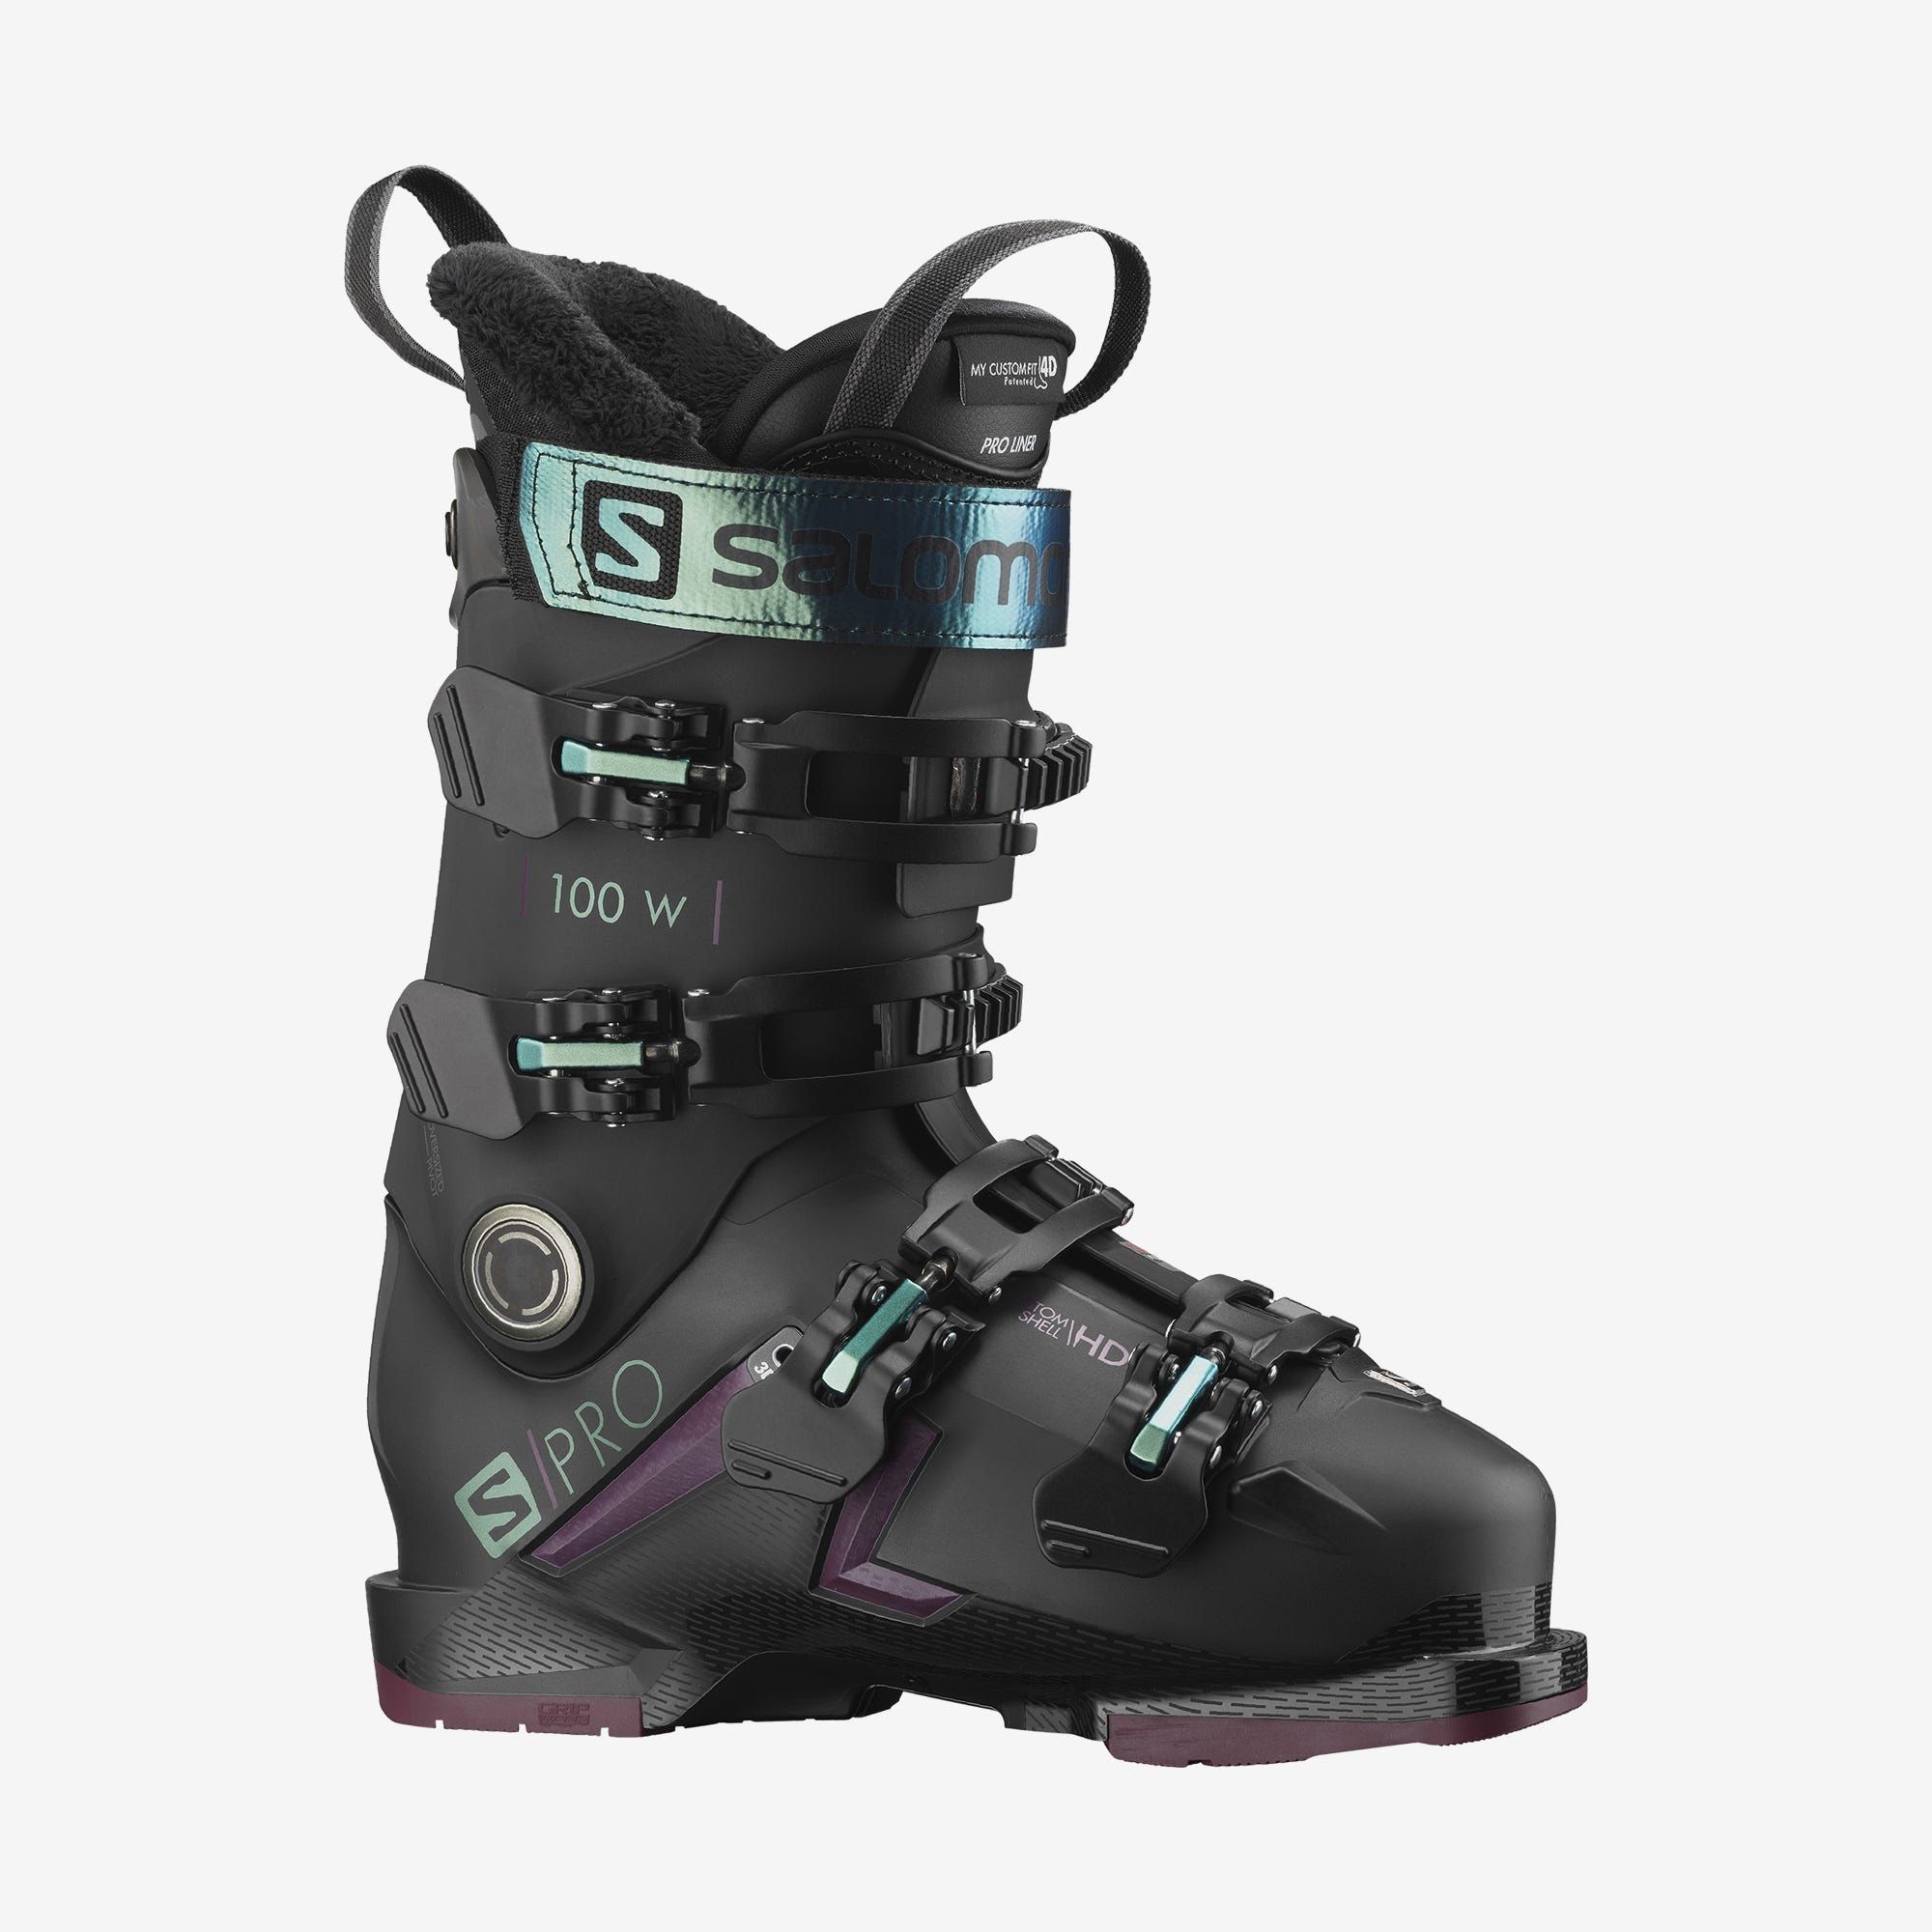 Chaussure de ski alpin S/Pro 100 W - Black / Burgandy / Shift Green / Blue